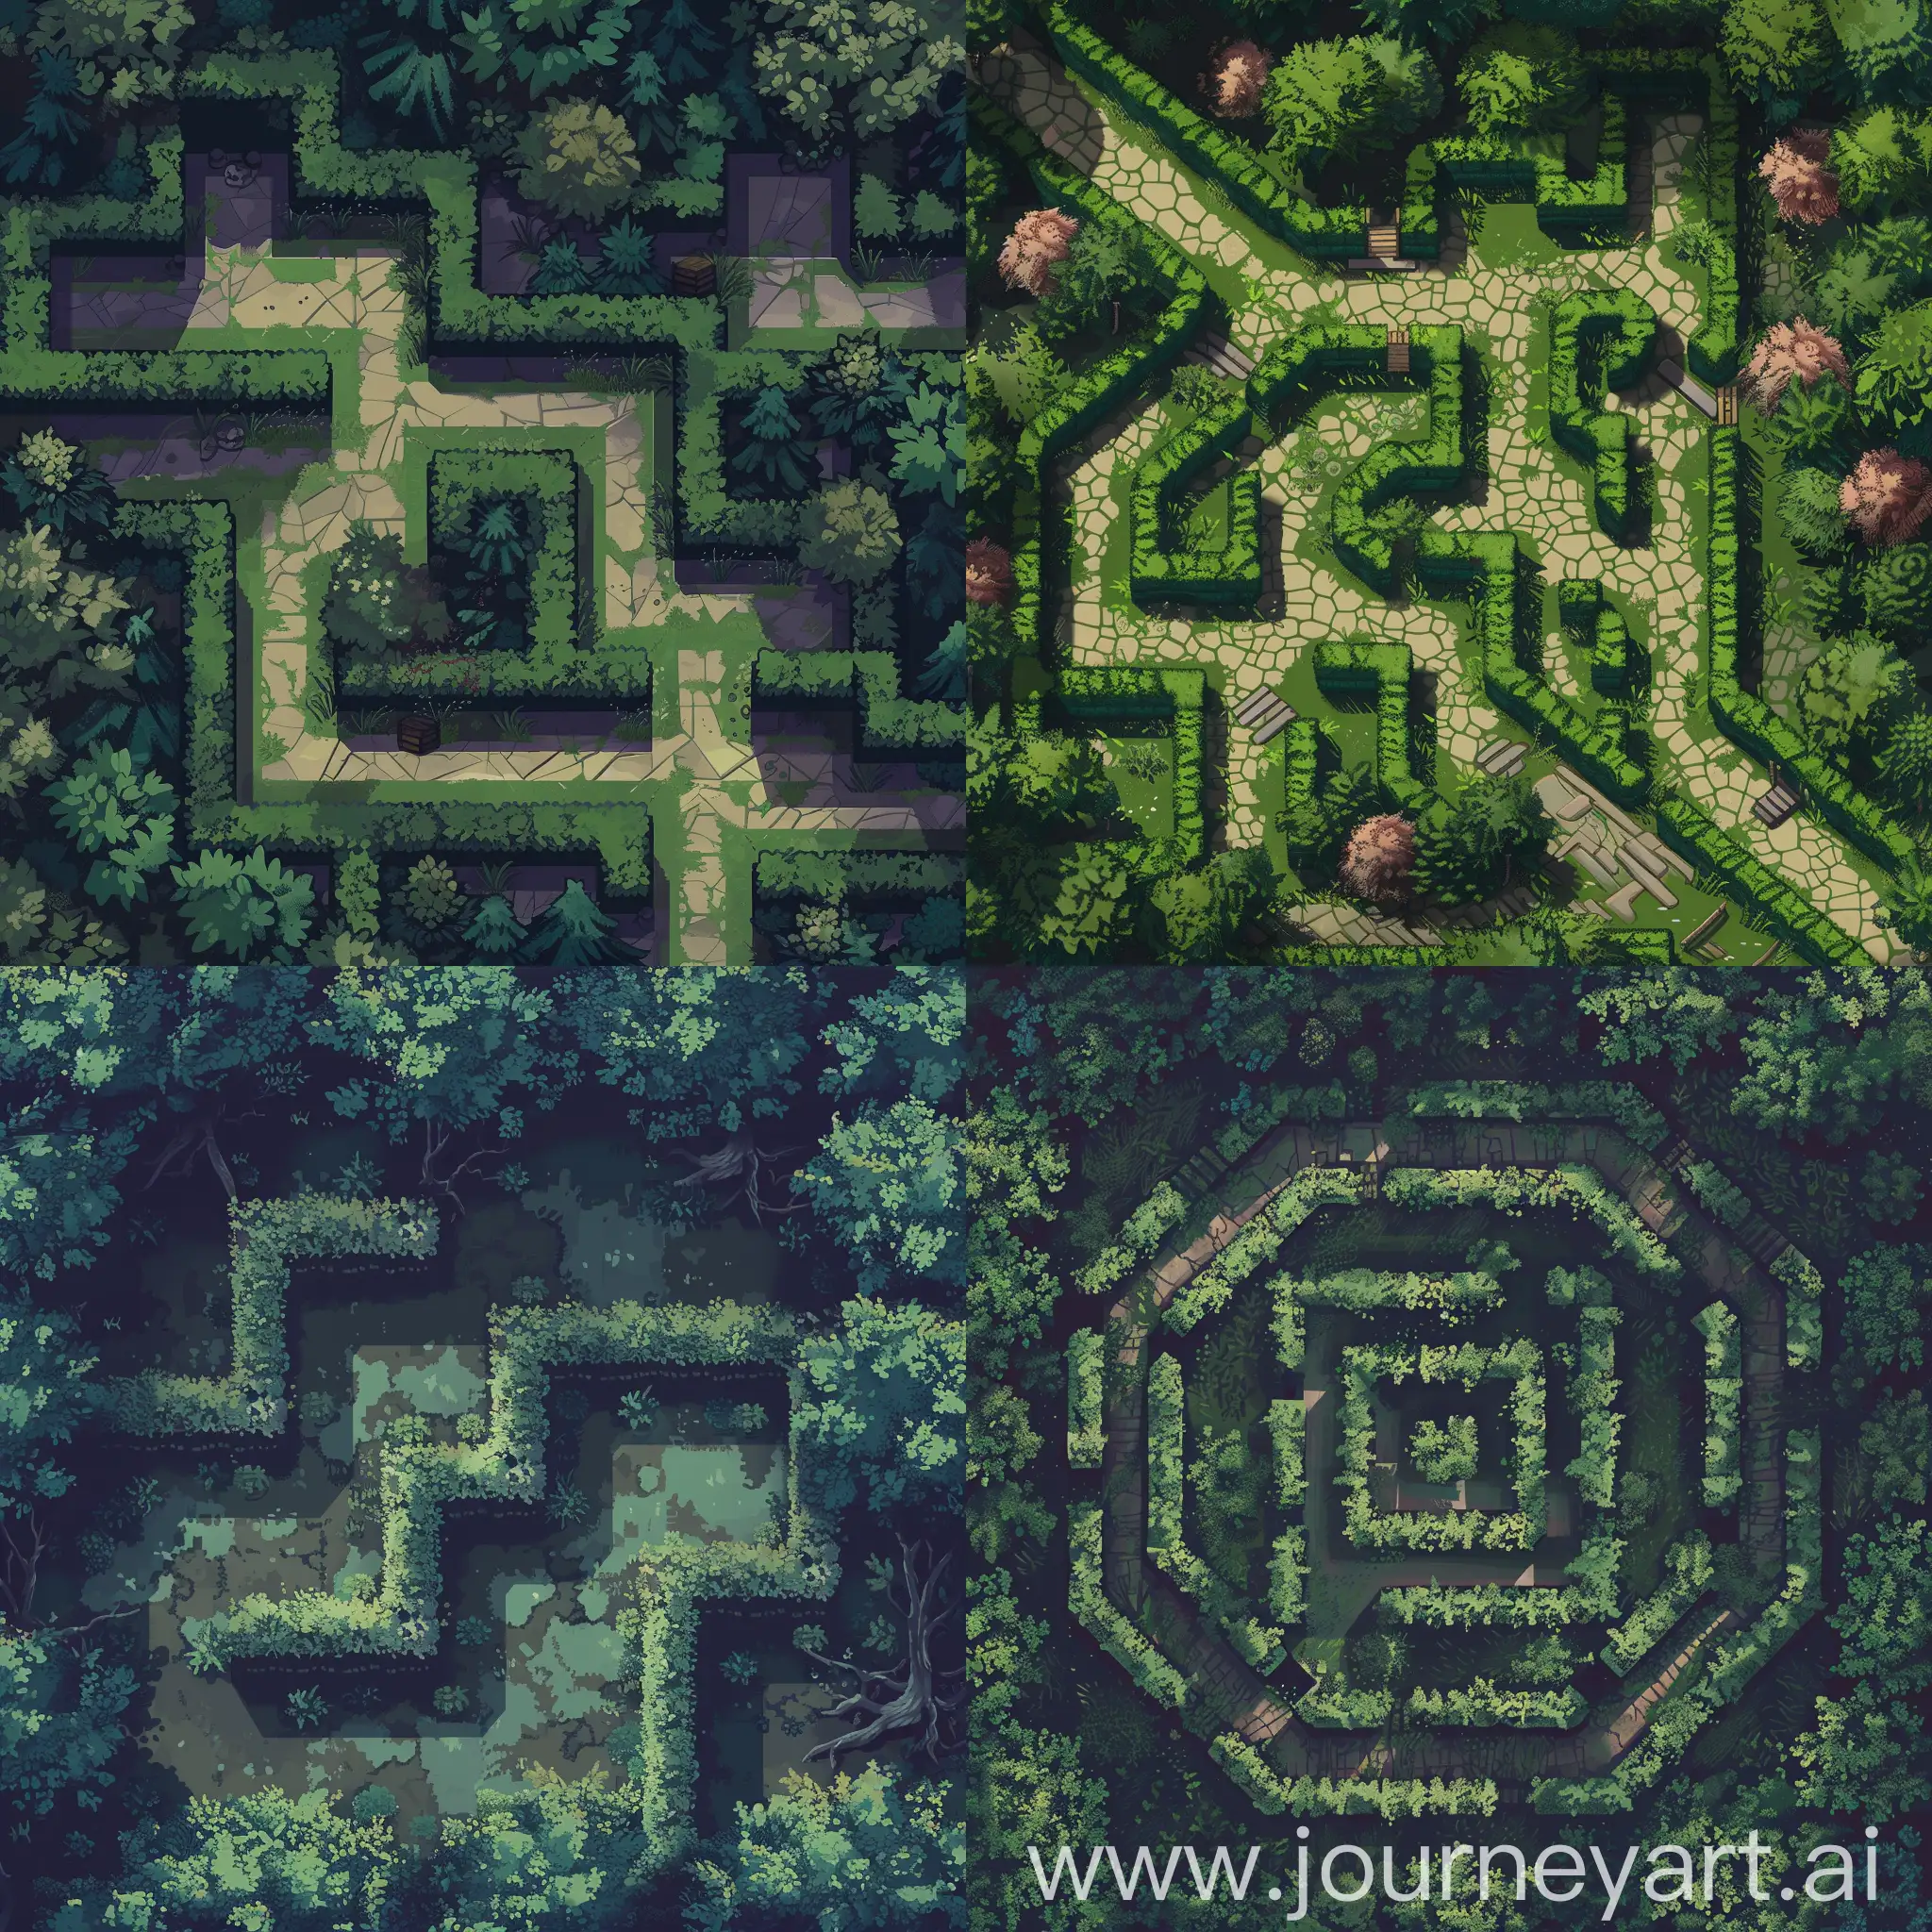 Topdown-Pixelated-RPG-Forest-Maze-Exploration-Scene